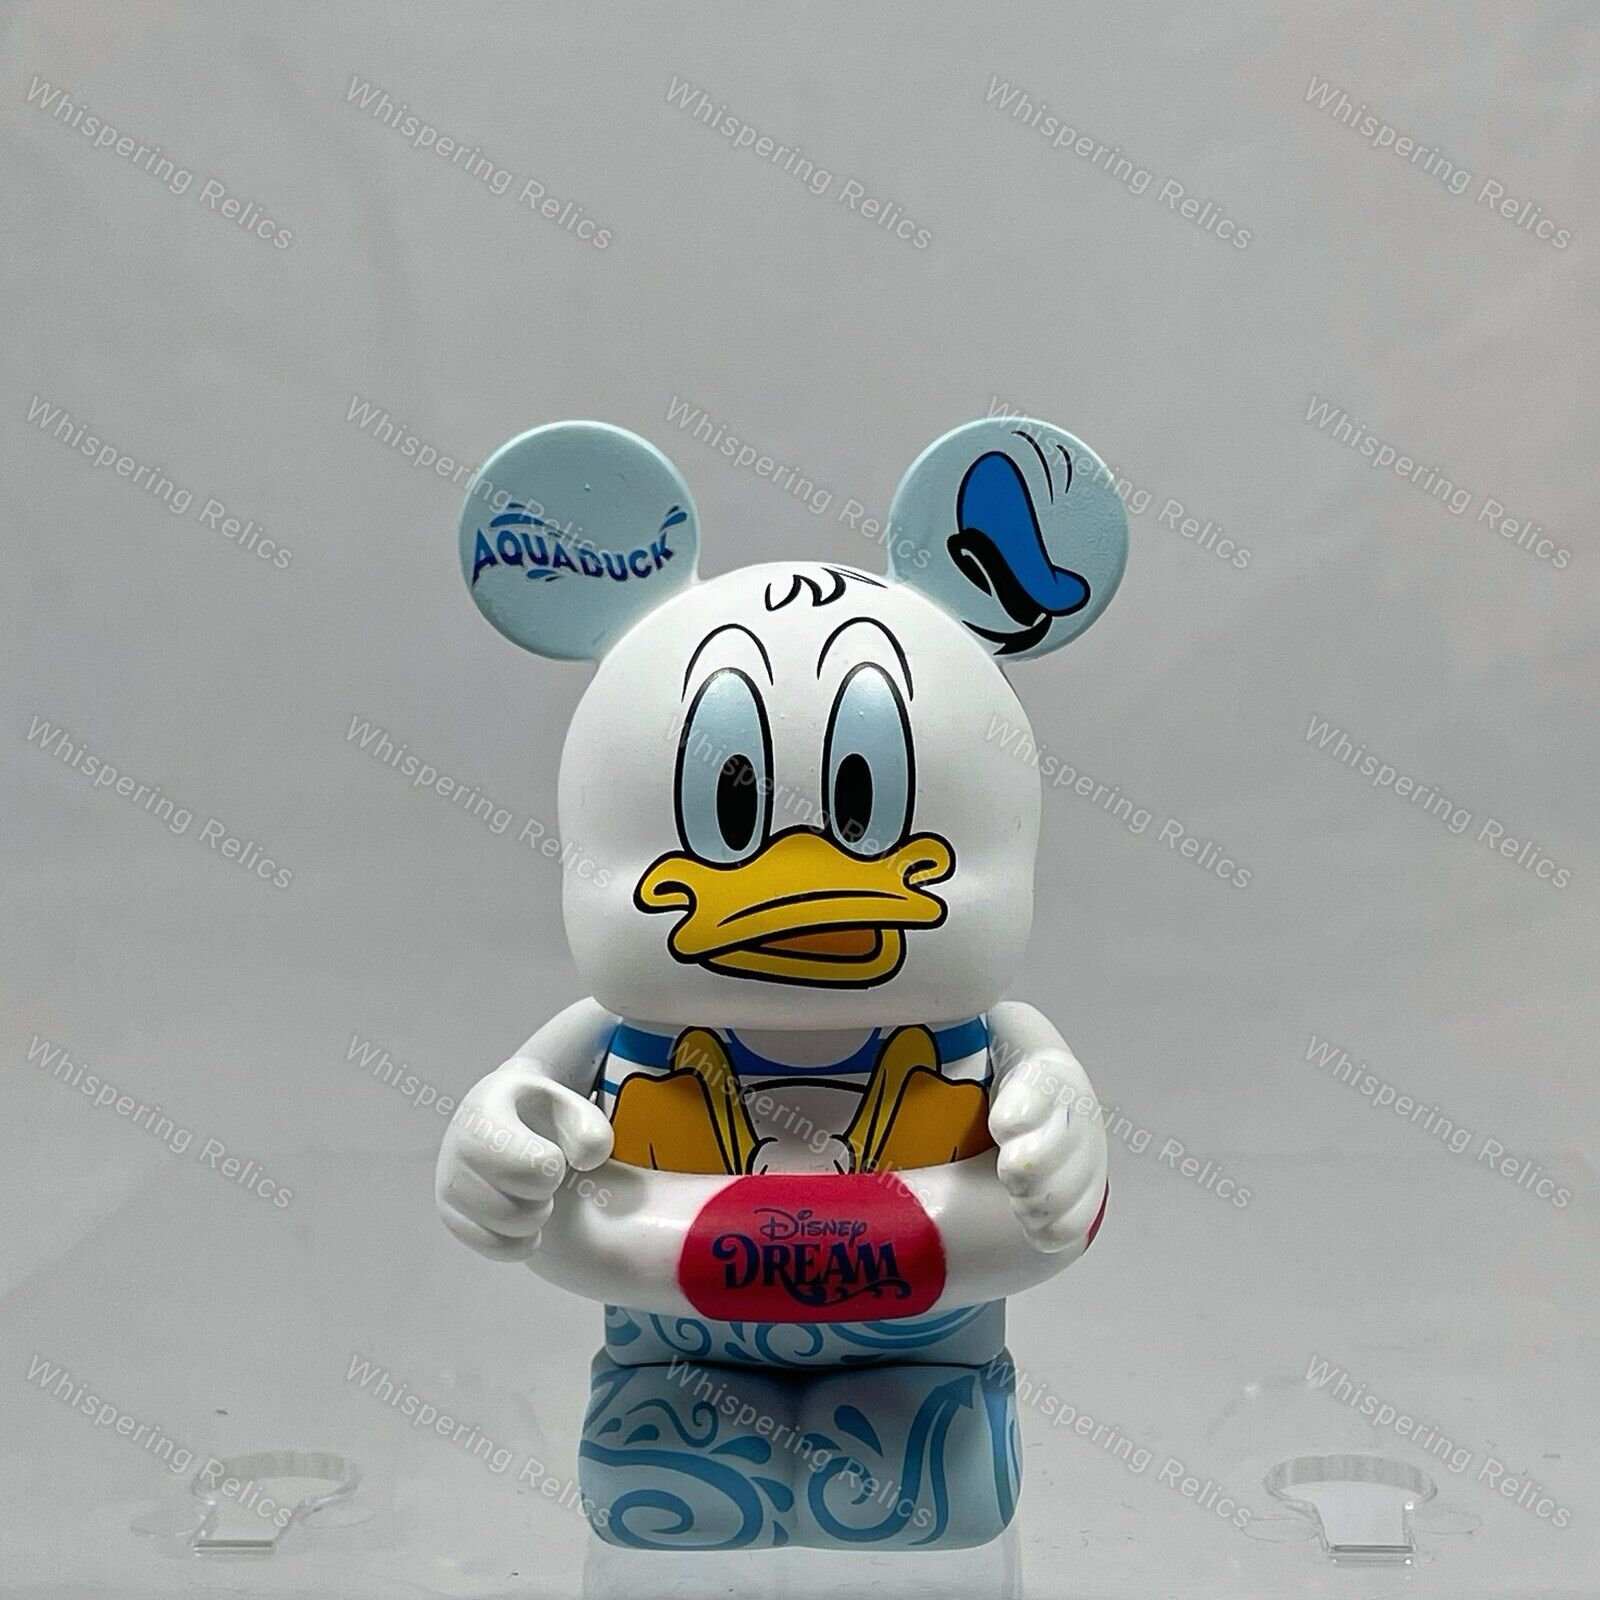 Donald Duck / The Aquaduck Vinylmation Figure | Disney Dream Cruise Line Series